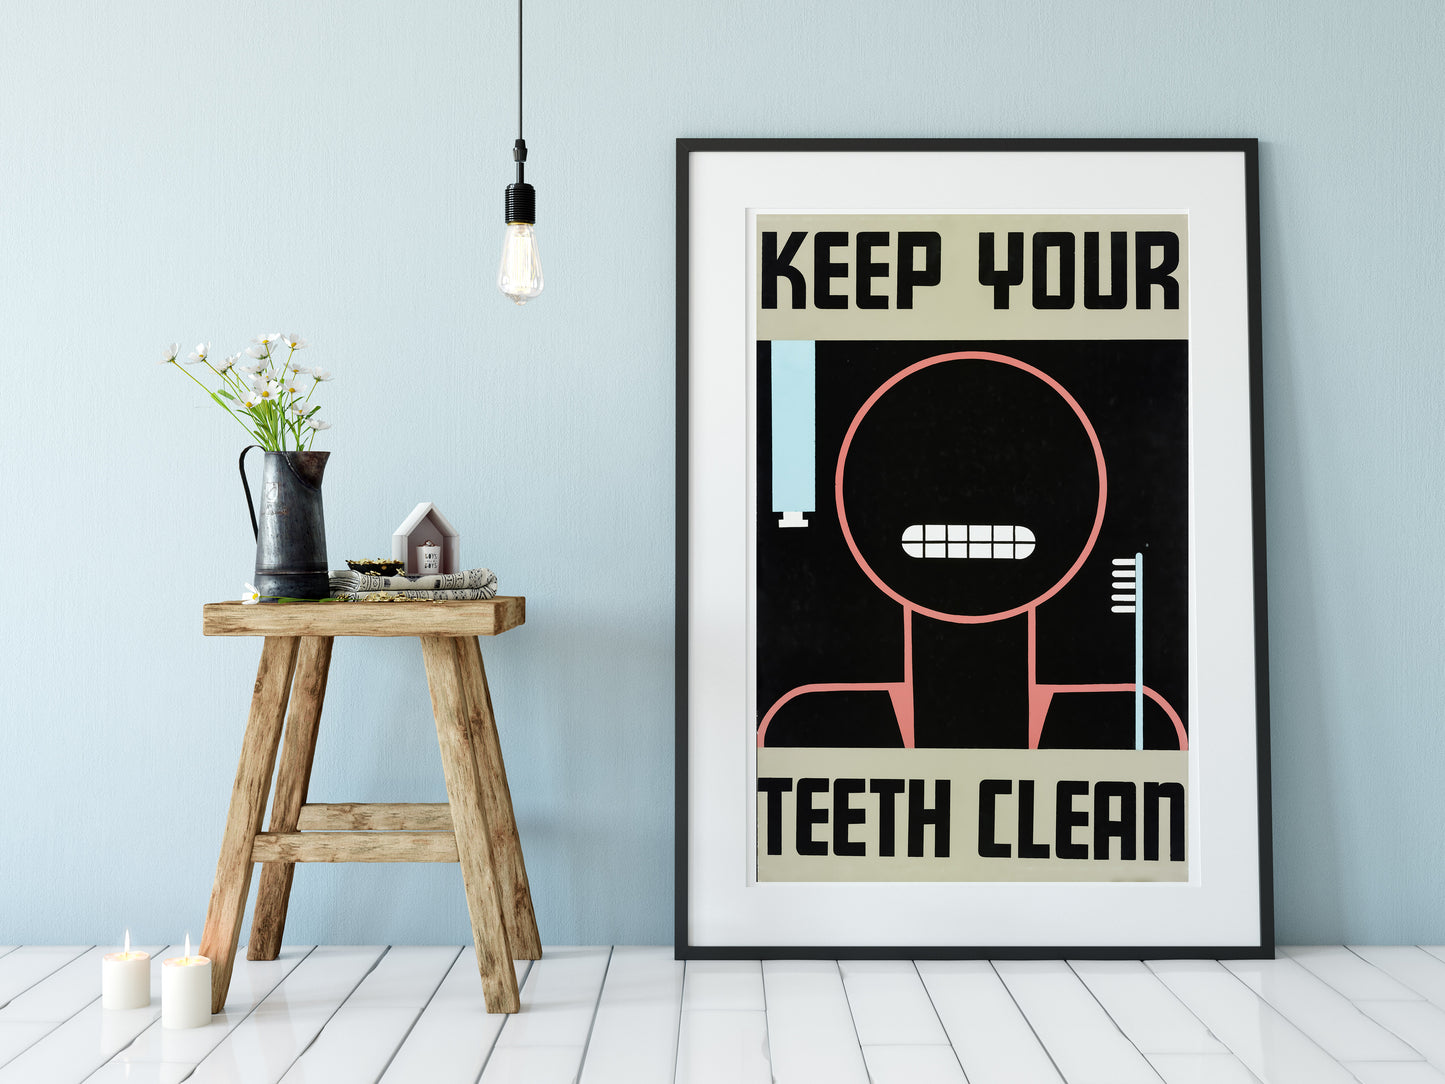 Keep your teeth clean dentist illustration print vintage prints